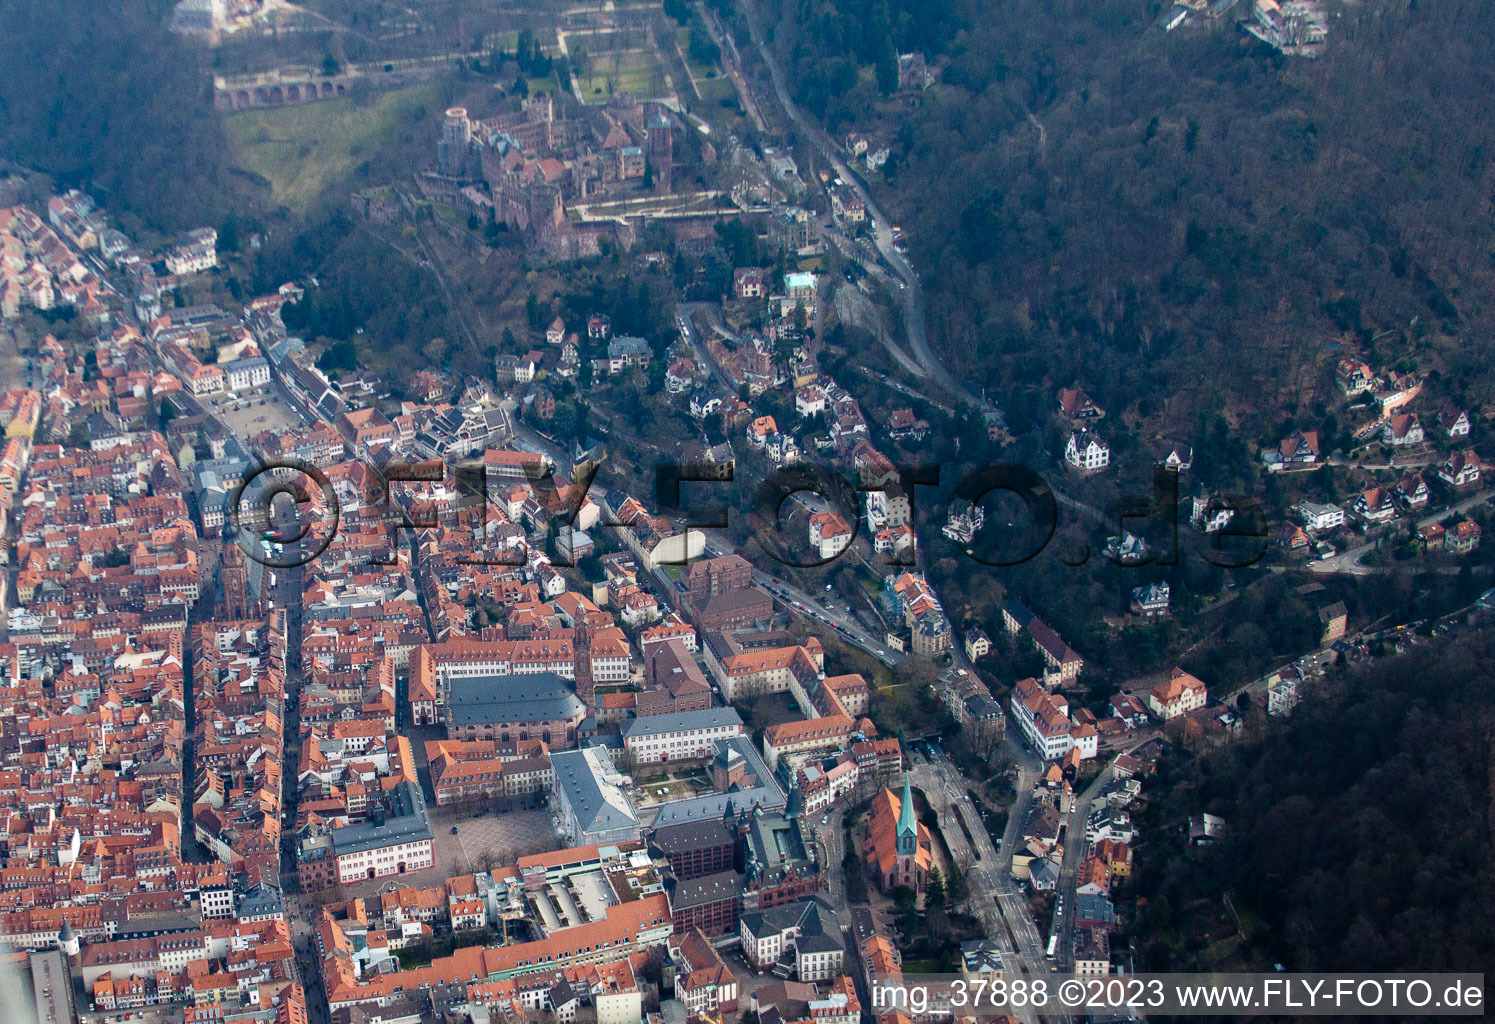 University and castle in the district Kernaltstadt in Heidelberg in the state Baden-Wuerttemberg, Germany